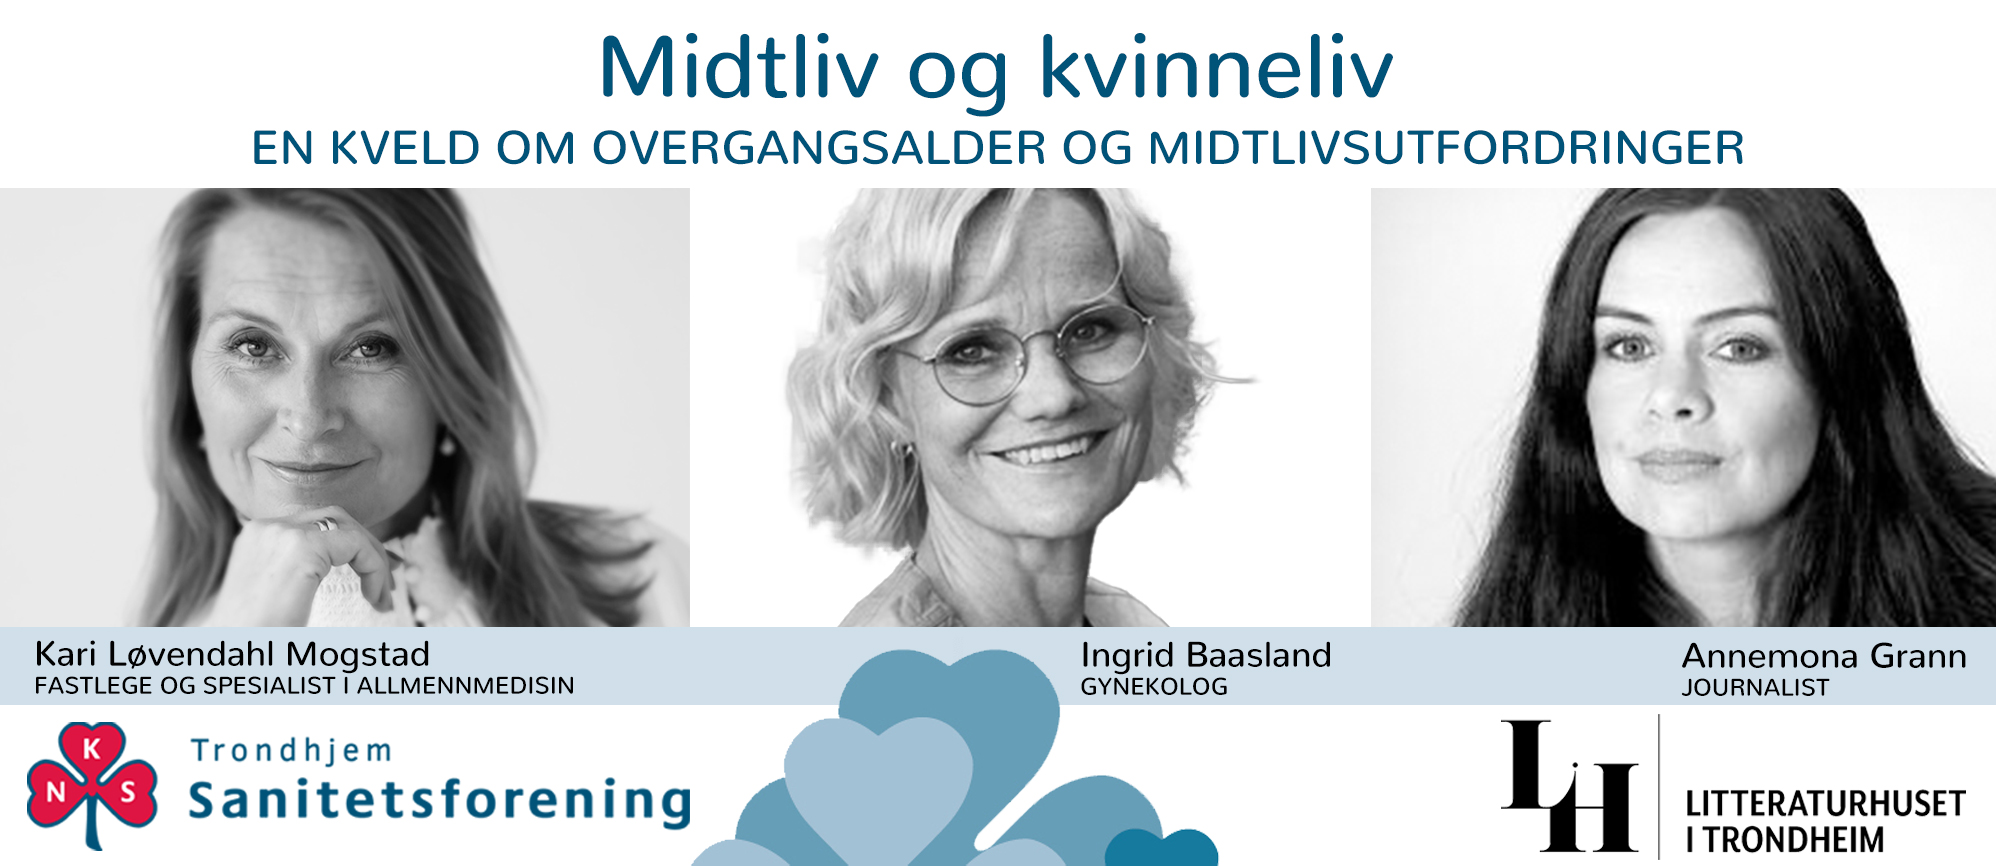 Kari Løvendahl Mogstad